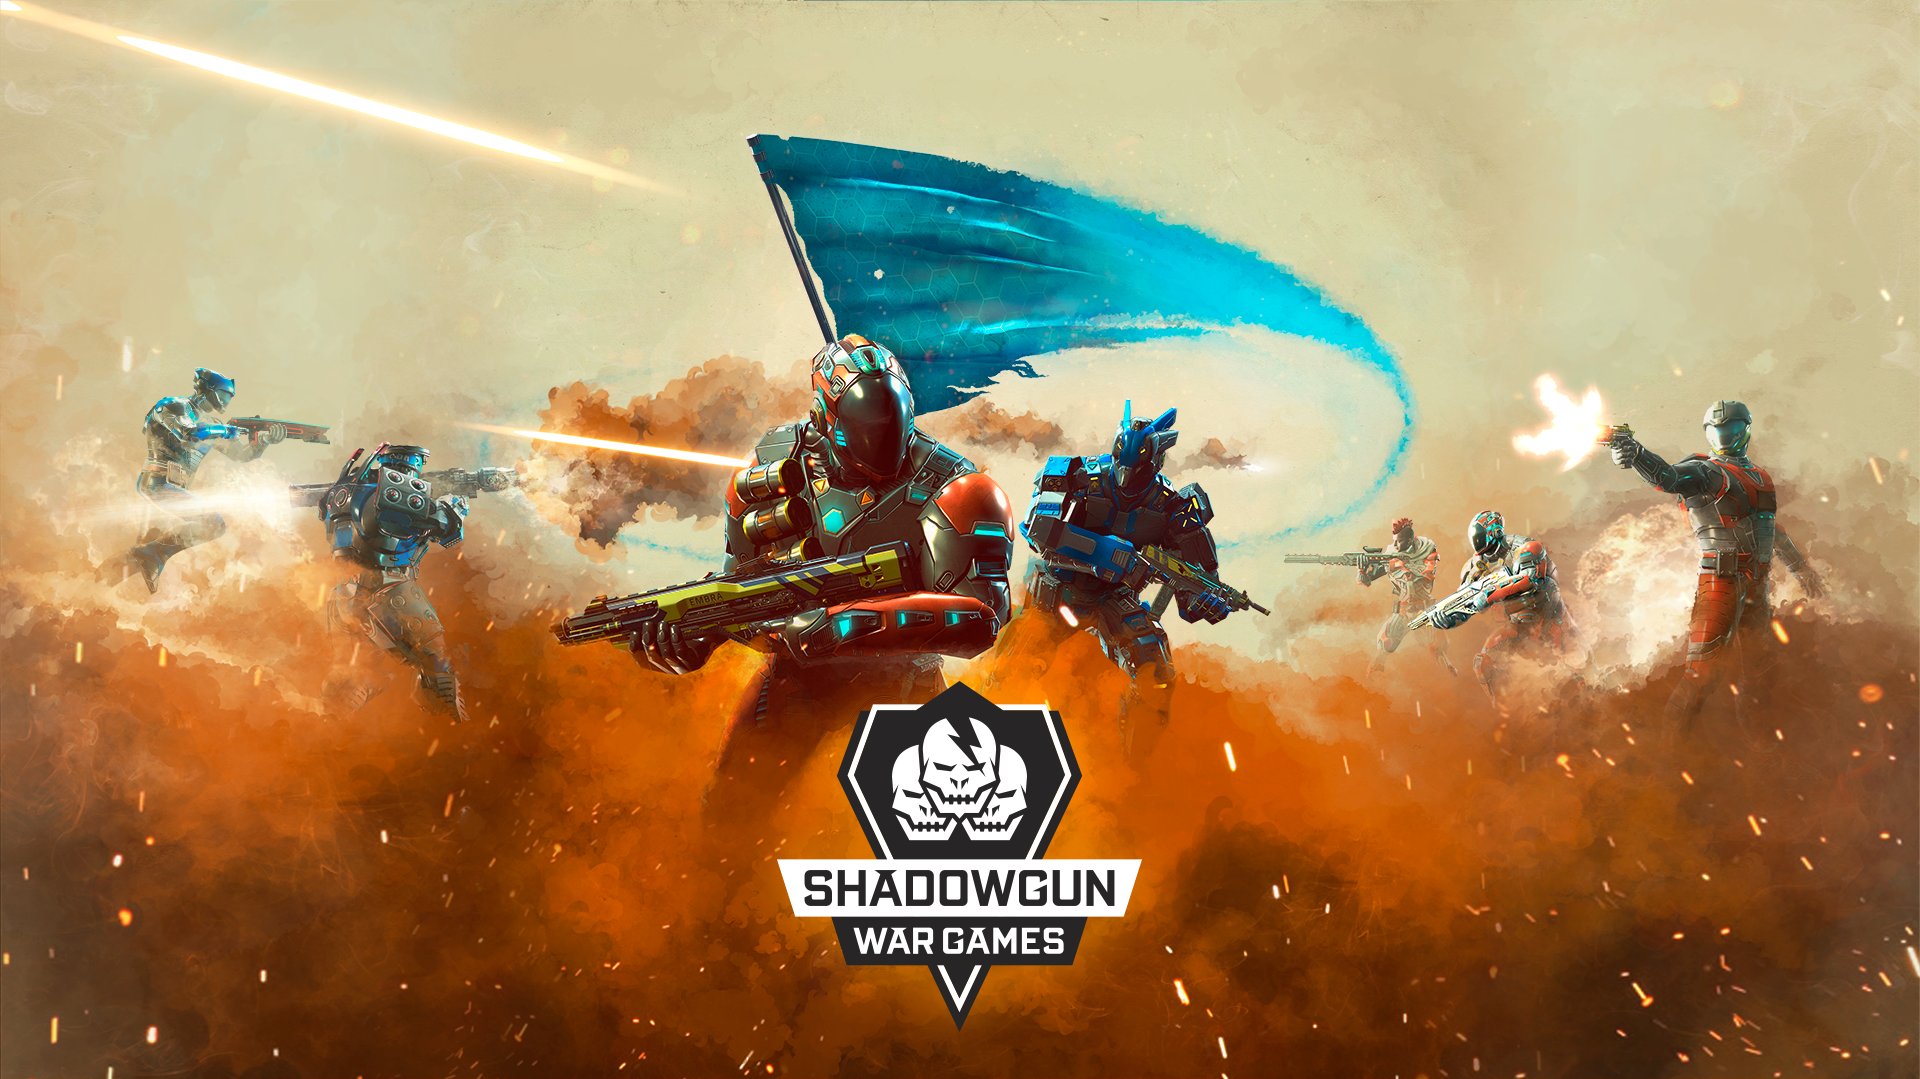 shadowgun legends vs shadowgun war games